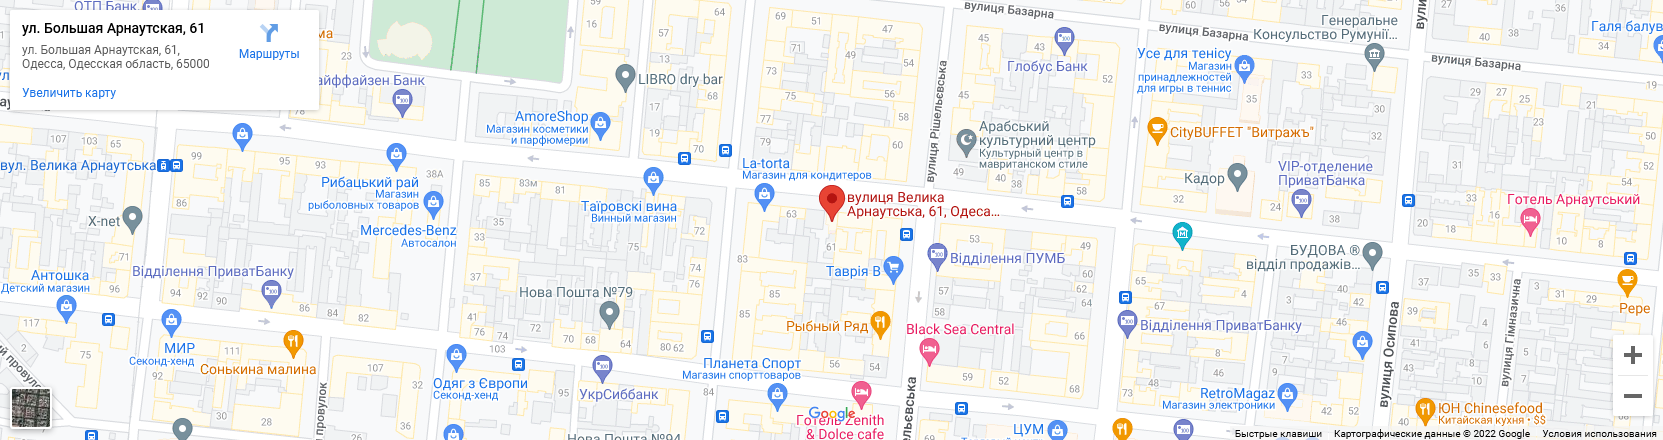 Салон ЧаоЯнь на карте Одессы